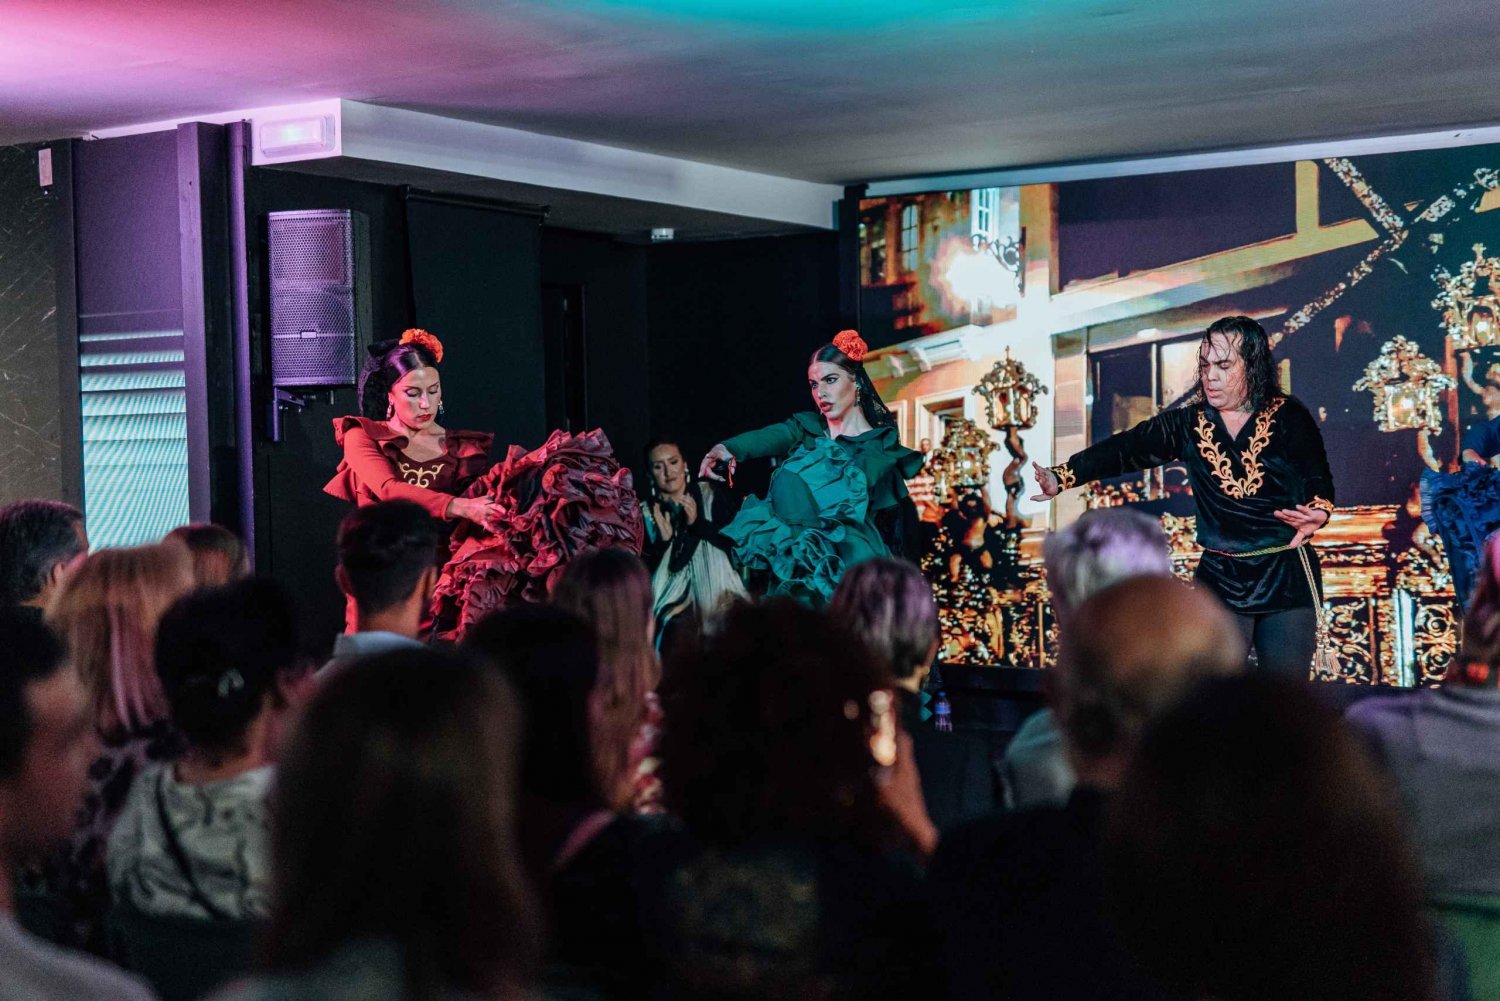 Malaga : Tablao Flamenco Show Antojo & Dîner optionnel